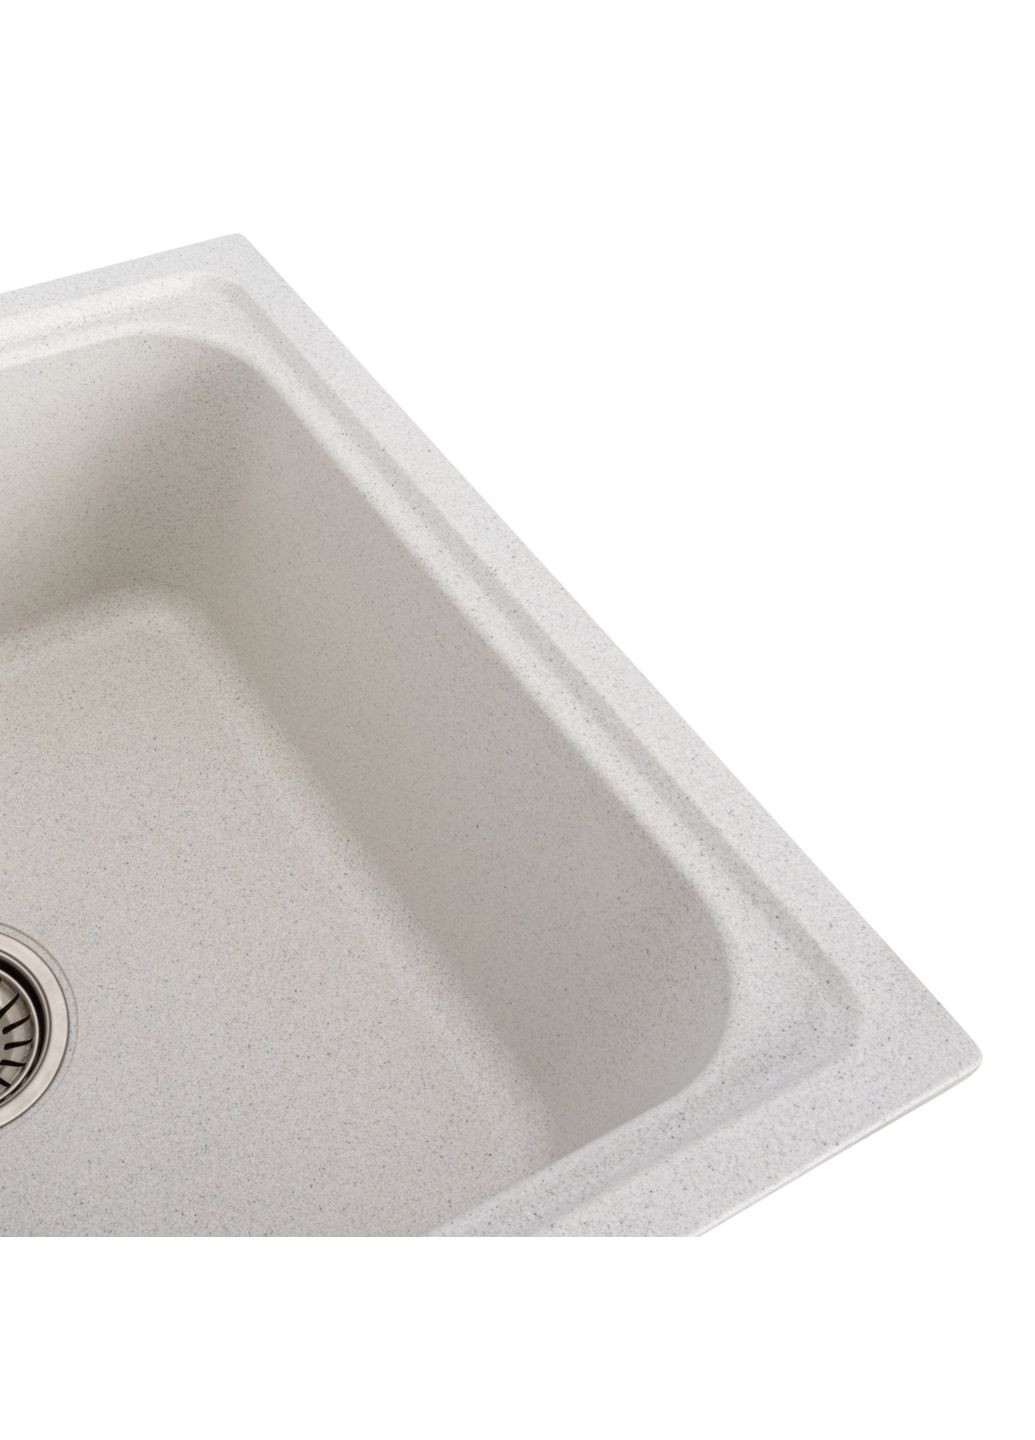 Гранітна мийка для кухні 7950 Equatoria матова Біла в крапку Platinum (277697100)